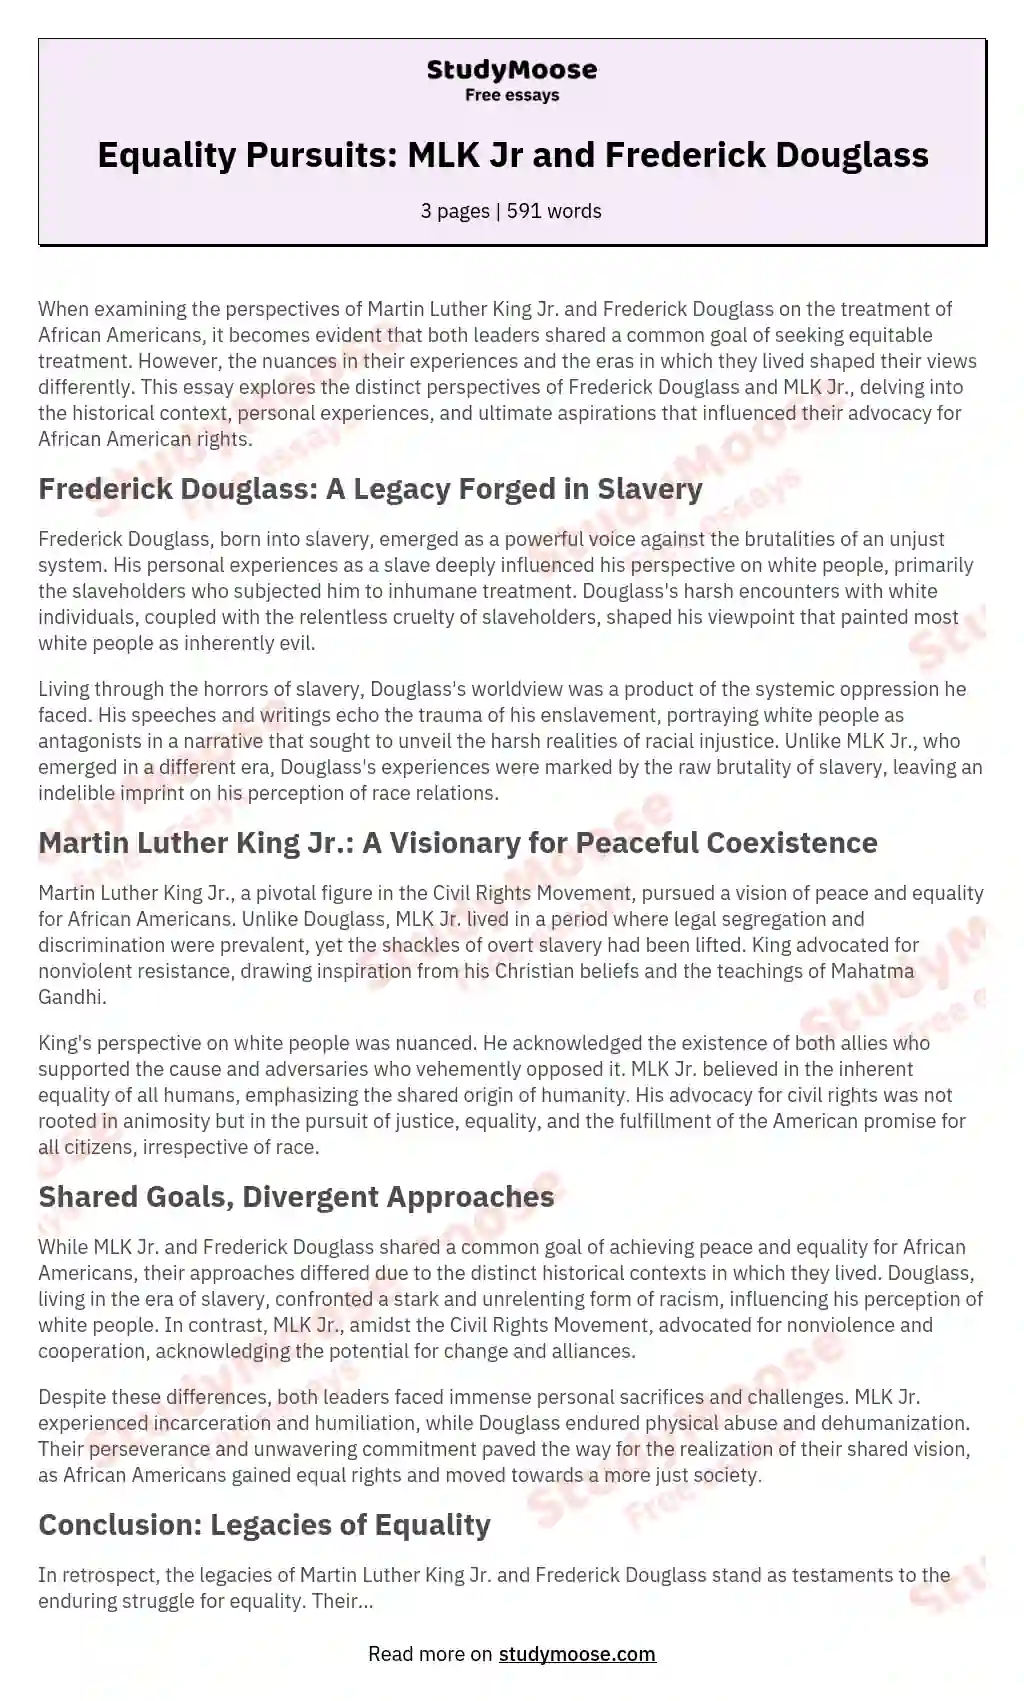 Frederick Douglass vs. Martin Luther King Jr.